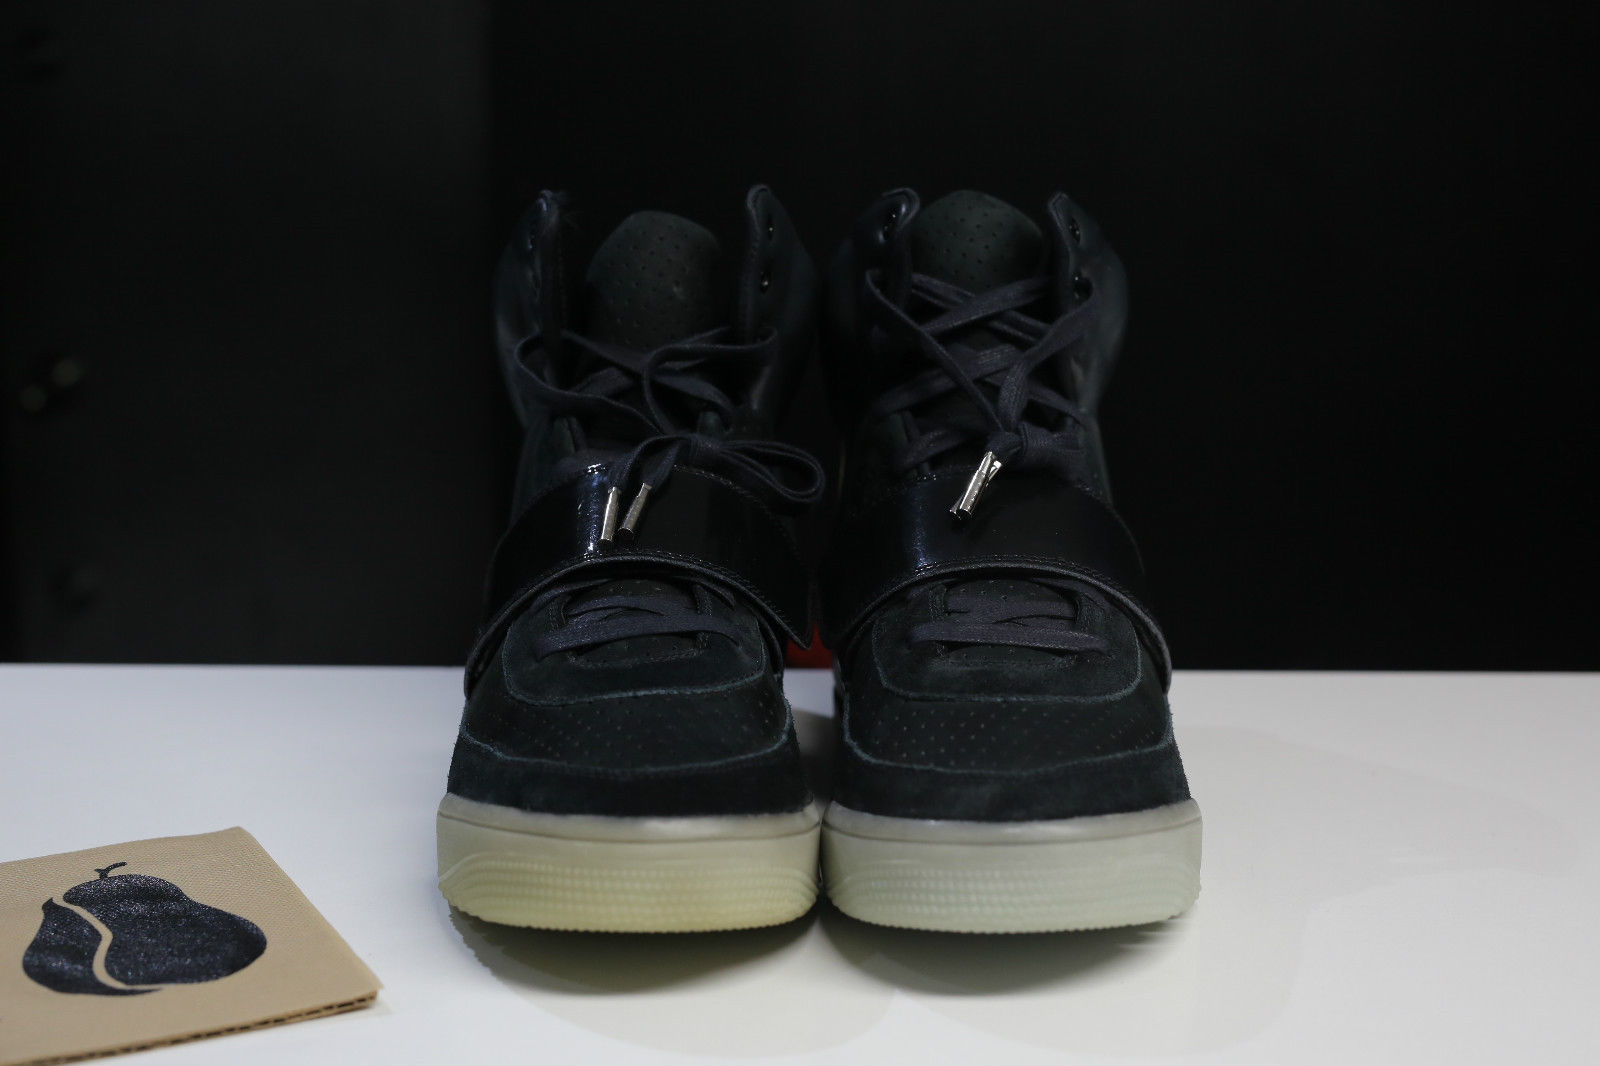 Nike Air Yeezy Kanye West Black/White Sample Pair Toe